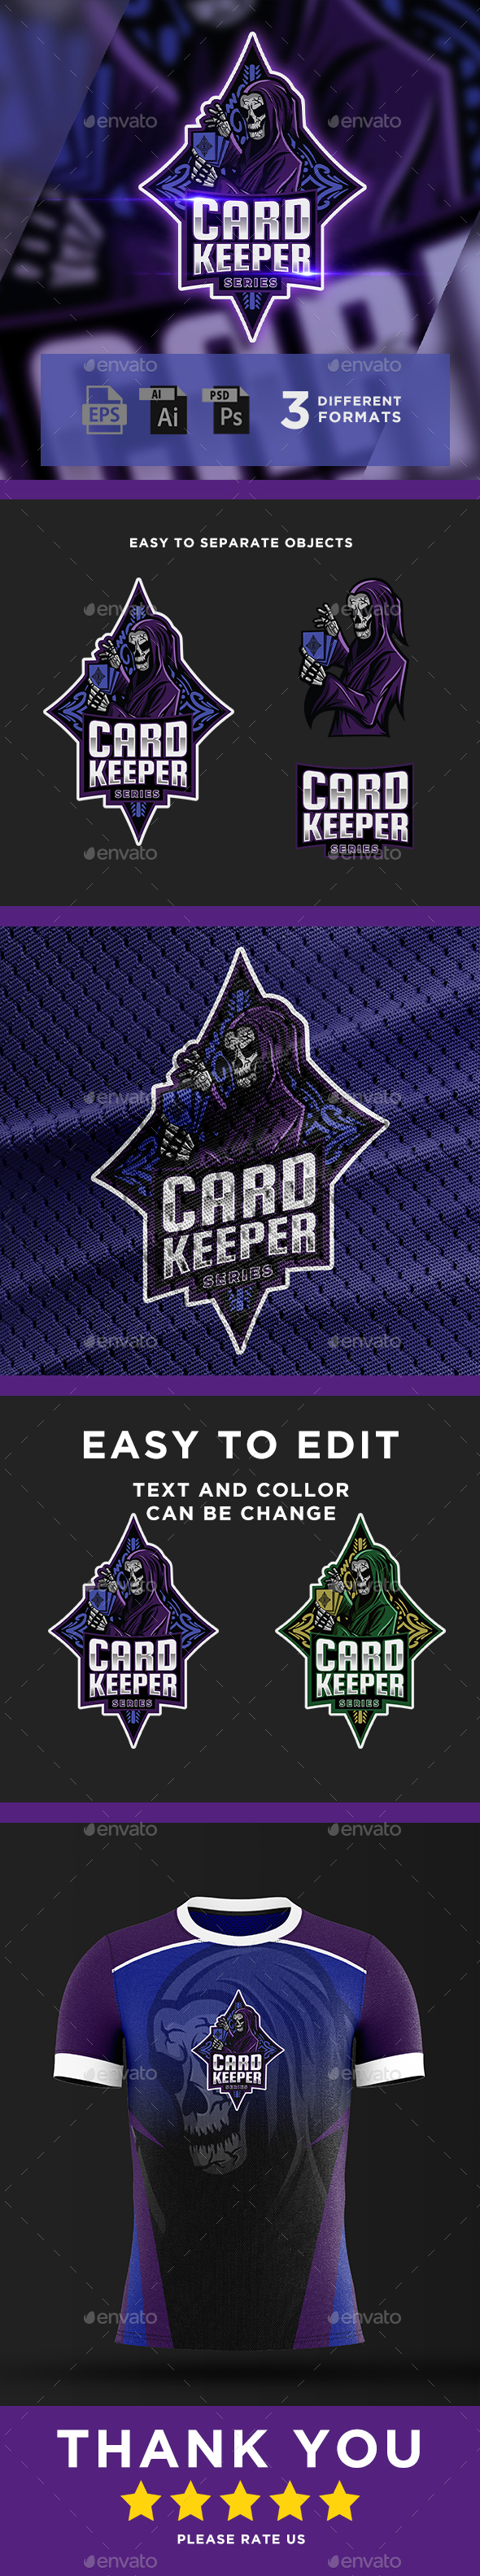 CARD KEEPER - DIAMOND SERIES Gaming Mascot